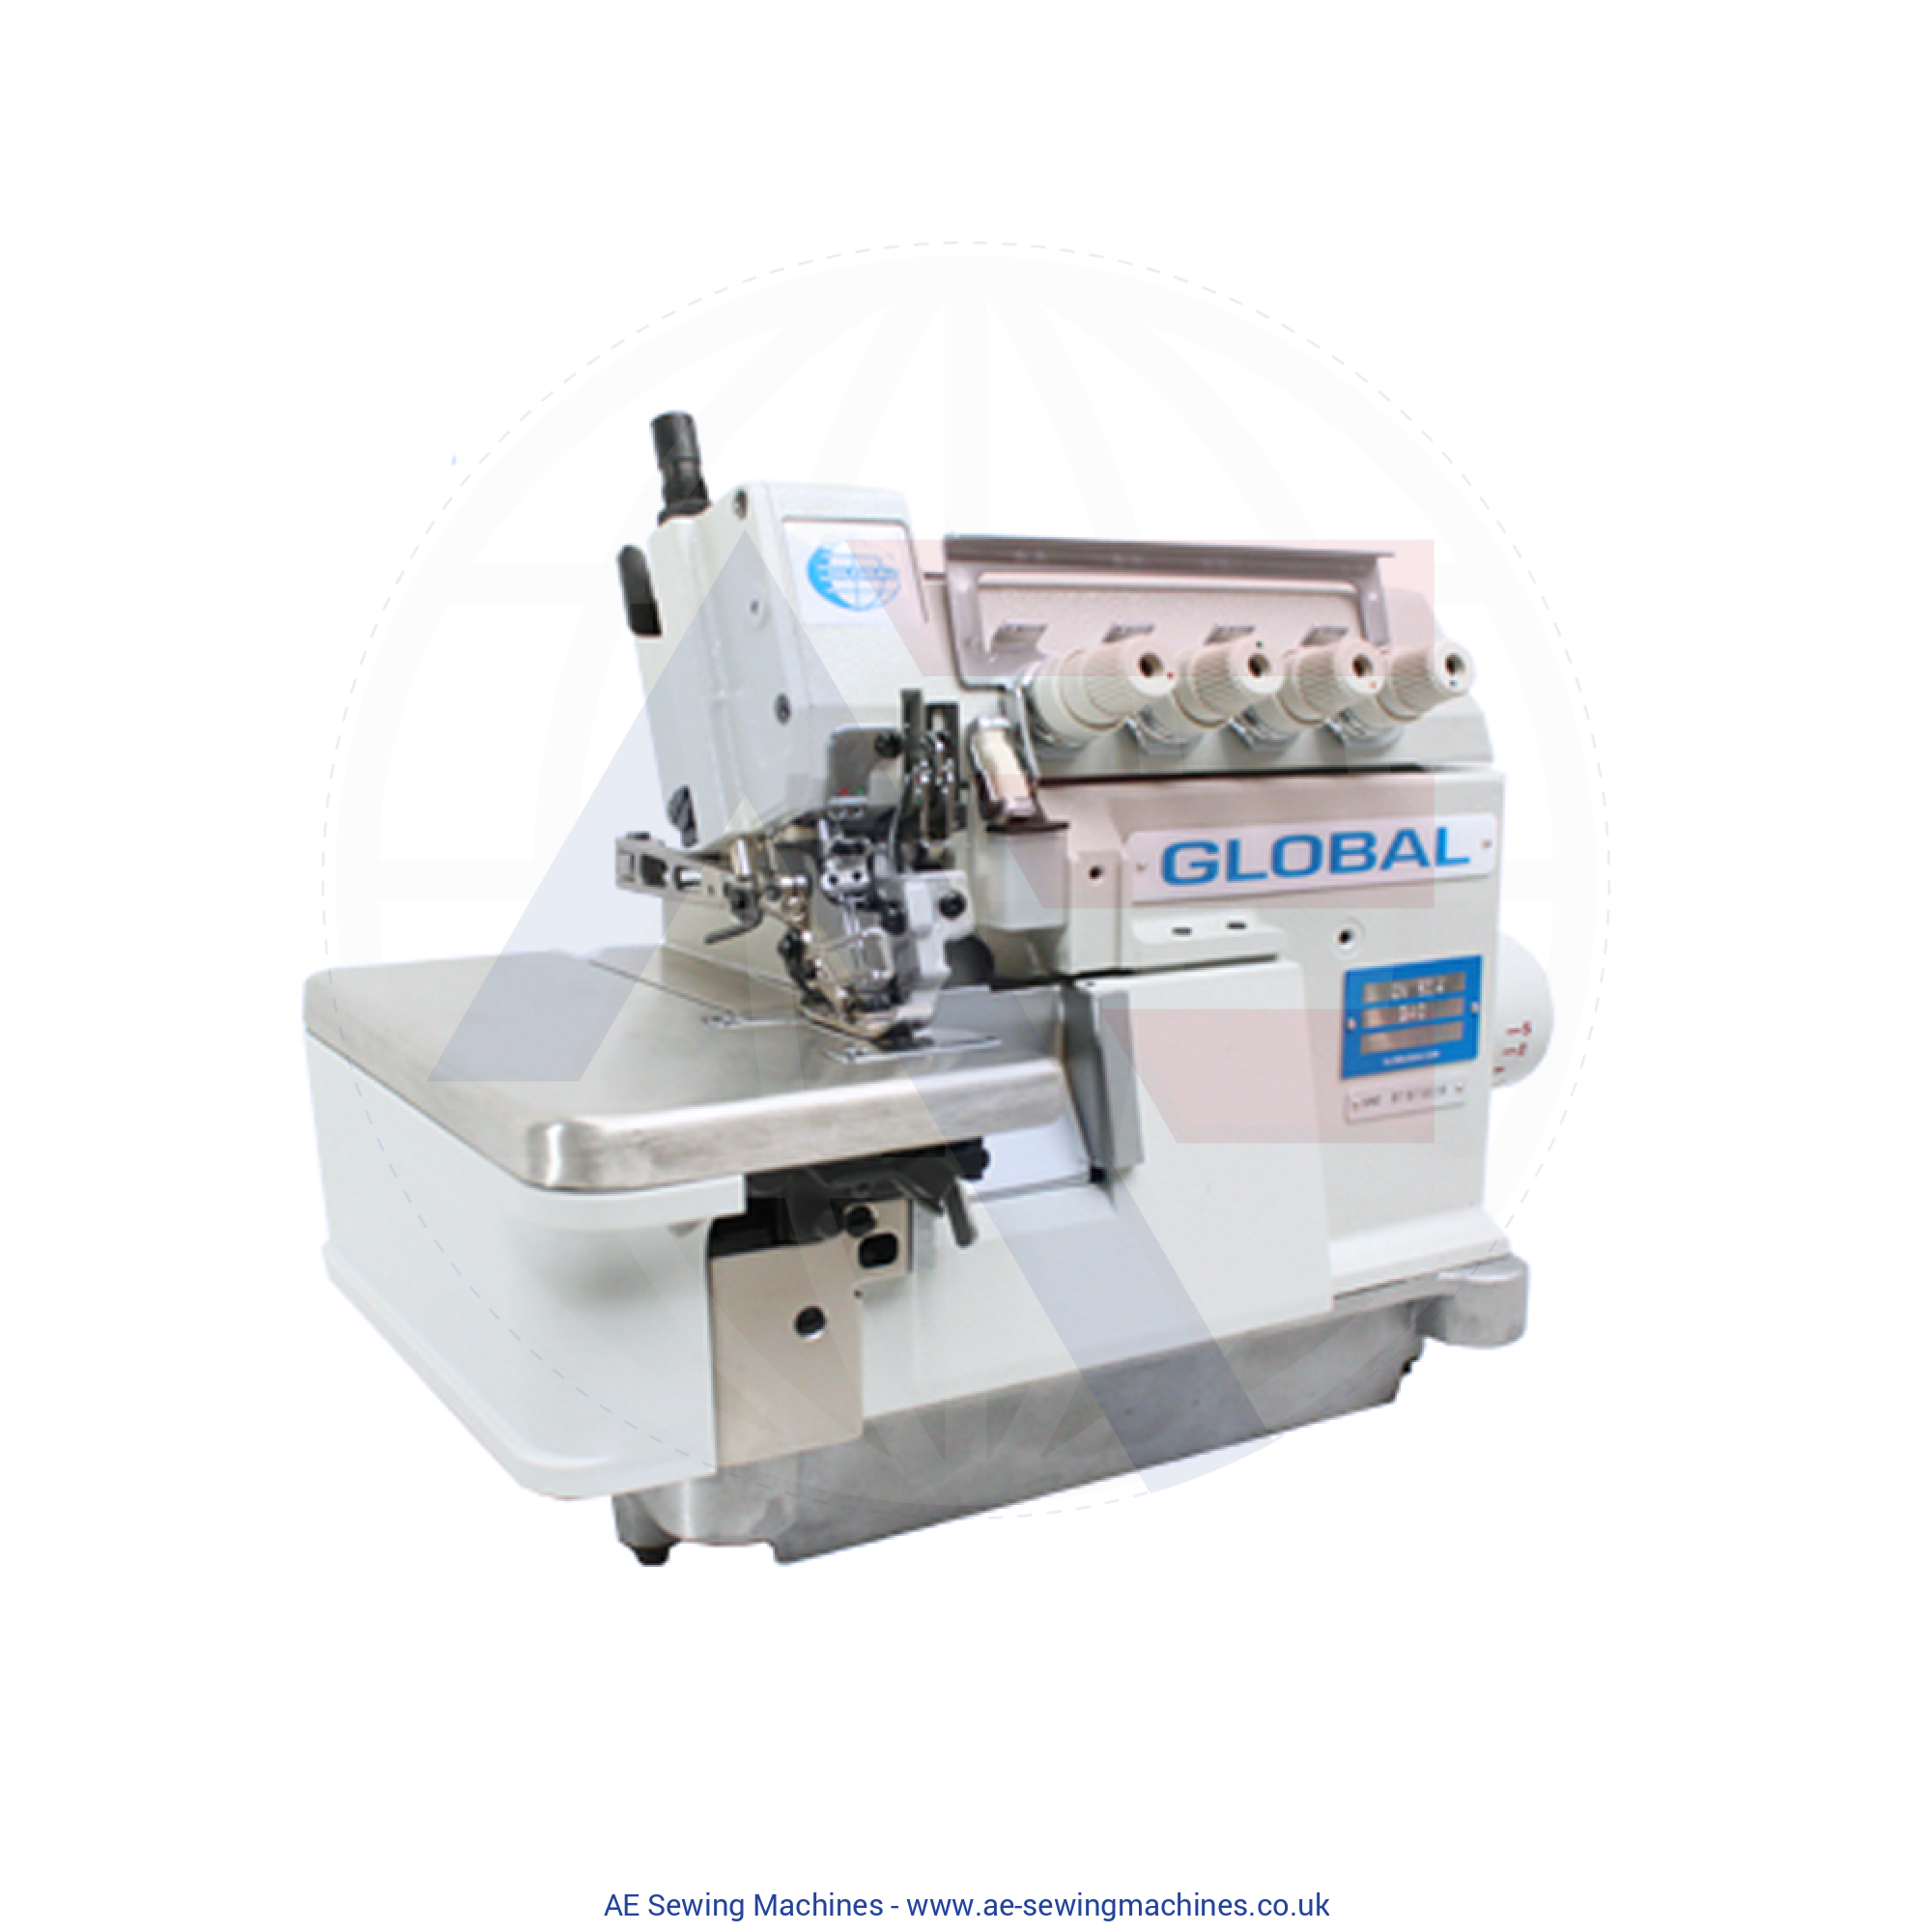 Global Ovt 500 Series Overlock Machine Sewing Machines